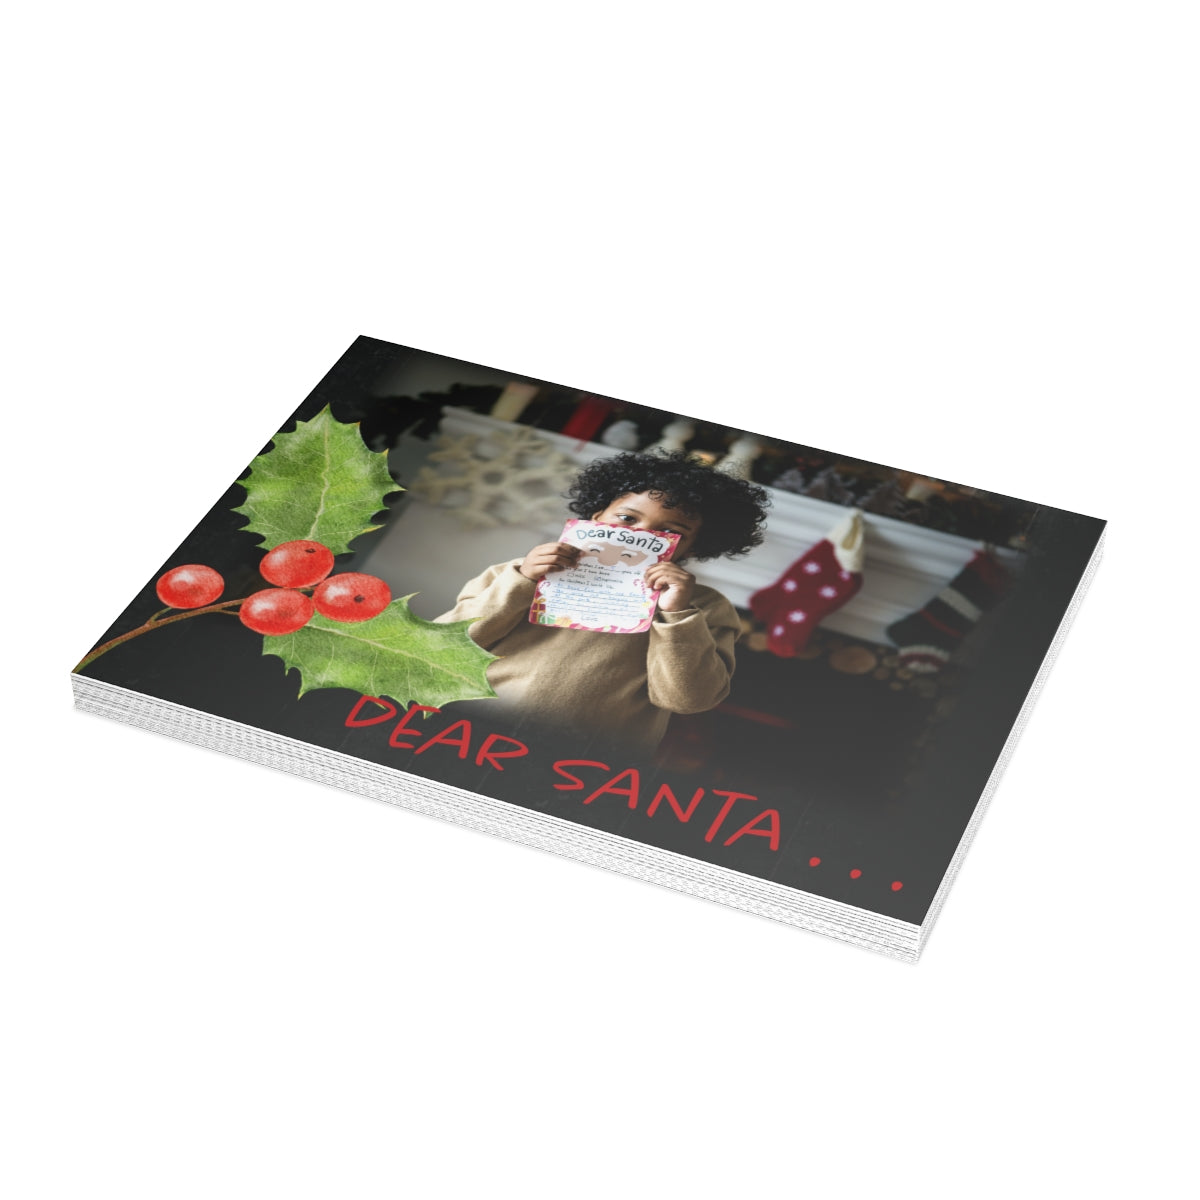 Dear Santa Greeting Card